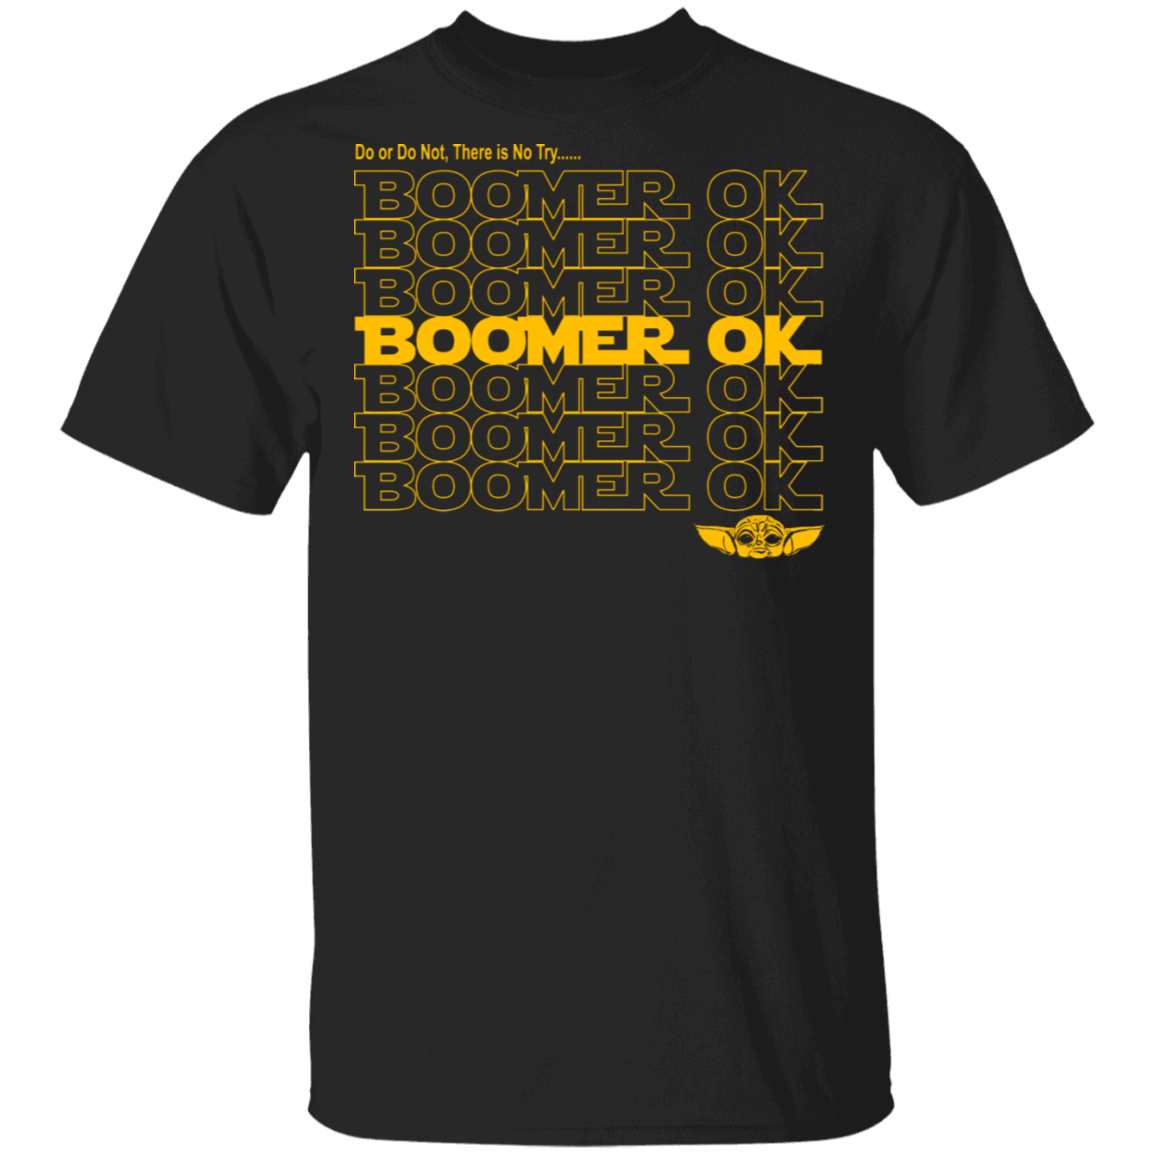 T-Shirts Black / S Boomer OK T-Shirt